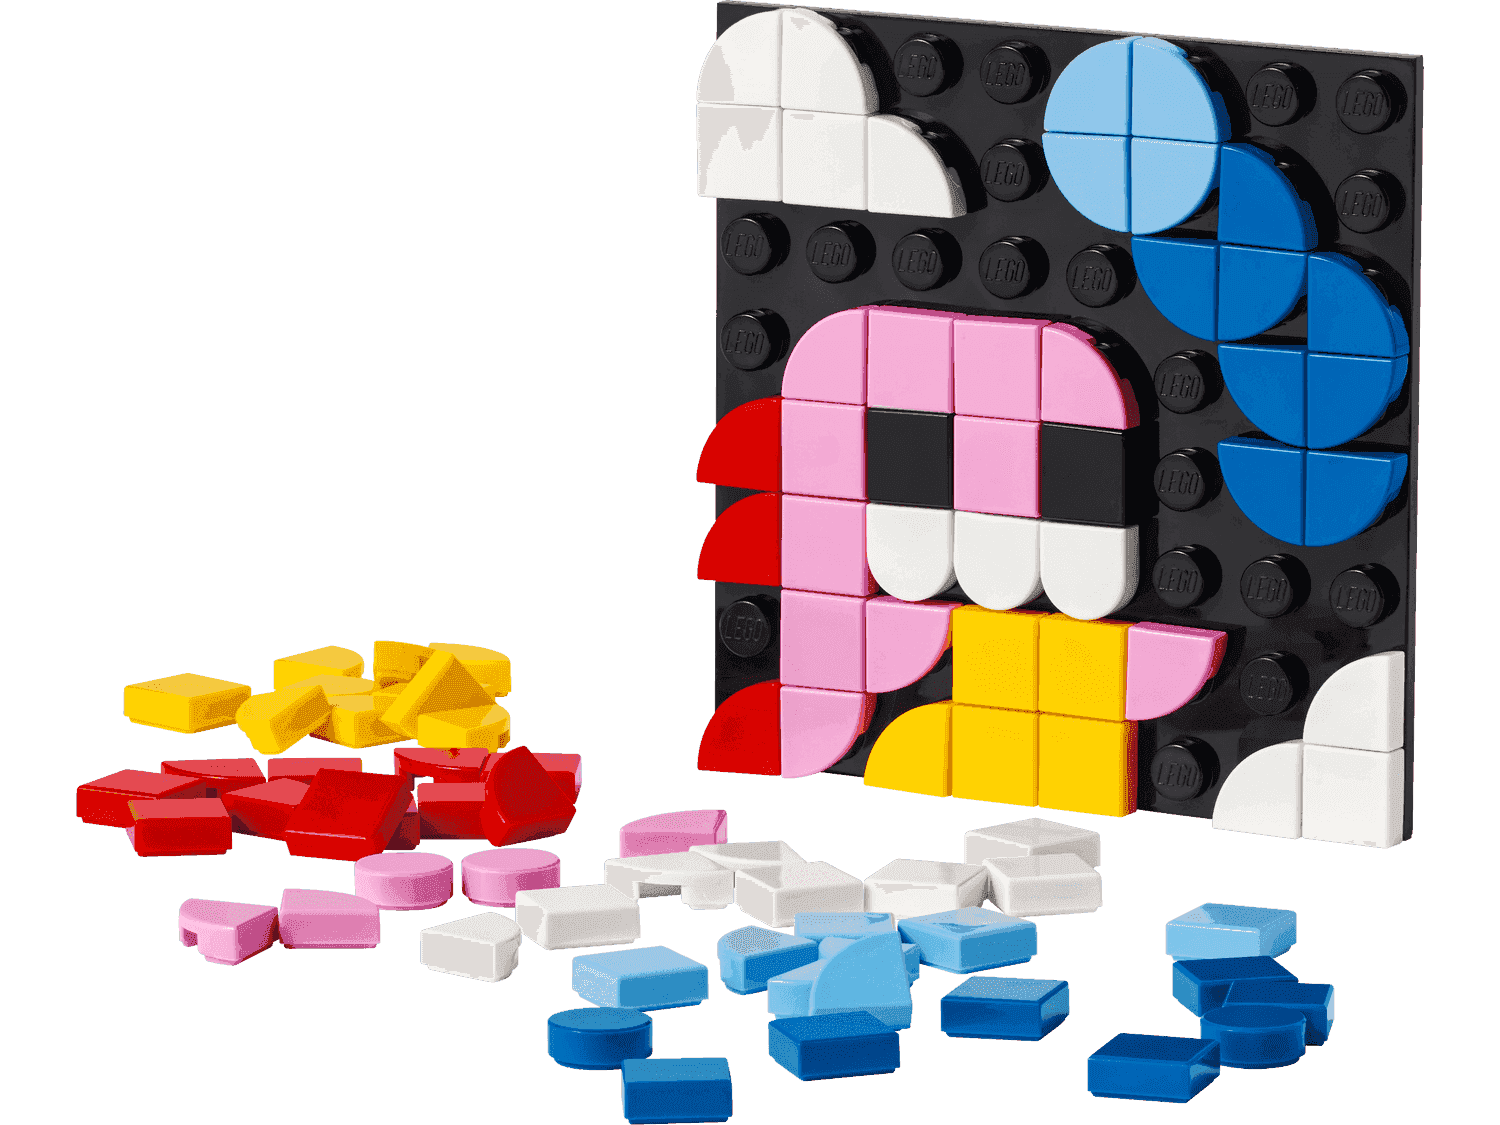 LEGO Zelfklevende patch 41954 DOTS | 2TTOYS ✓ Official shop<br>